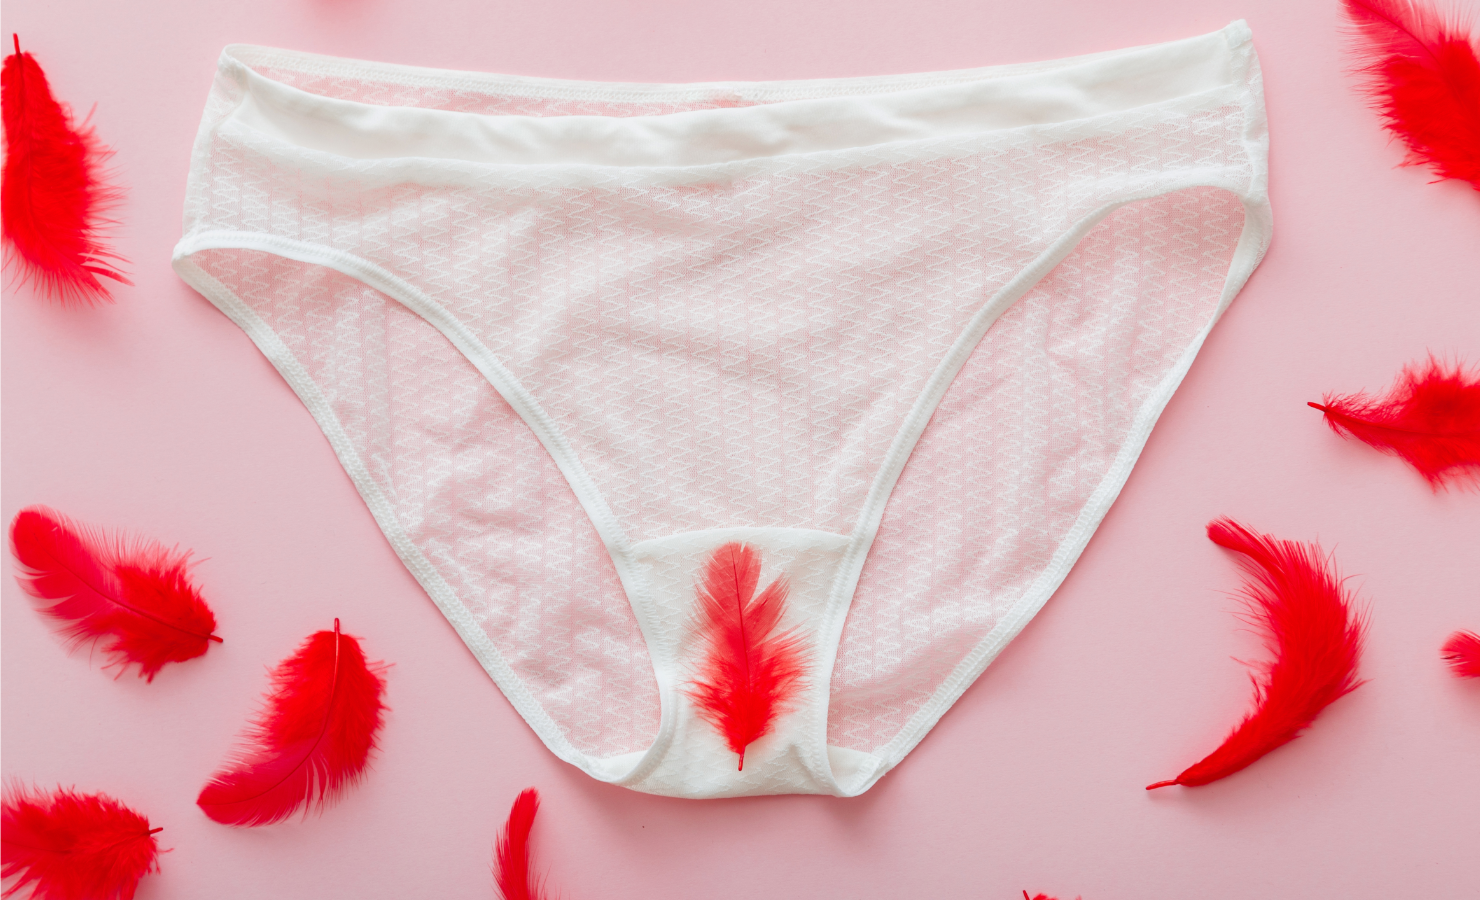 spotting between periods spotting before periods, spotting during  ovulation, spotting before periods, inter menstrual bleeding